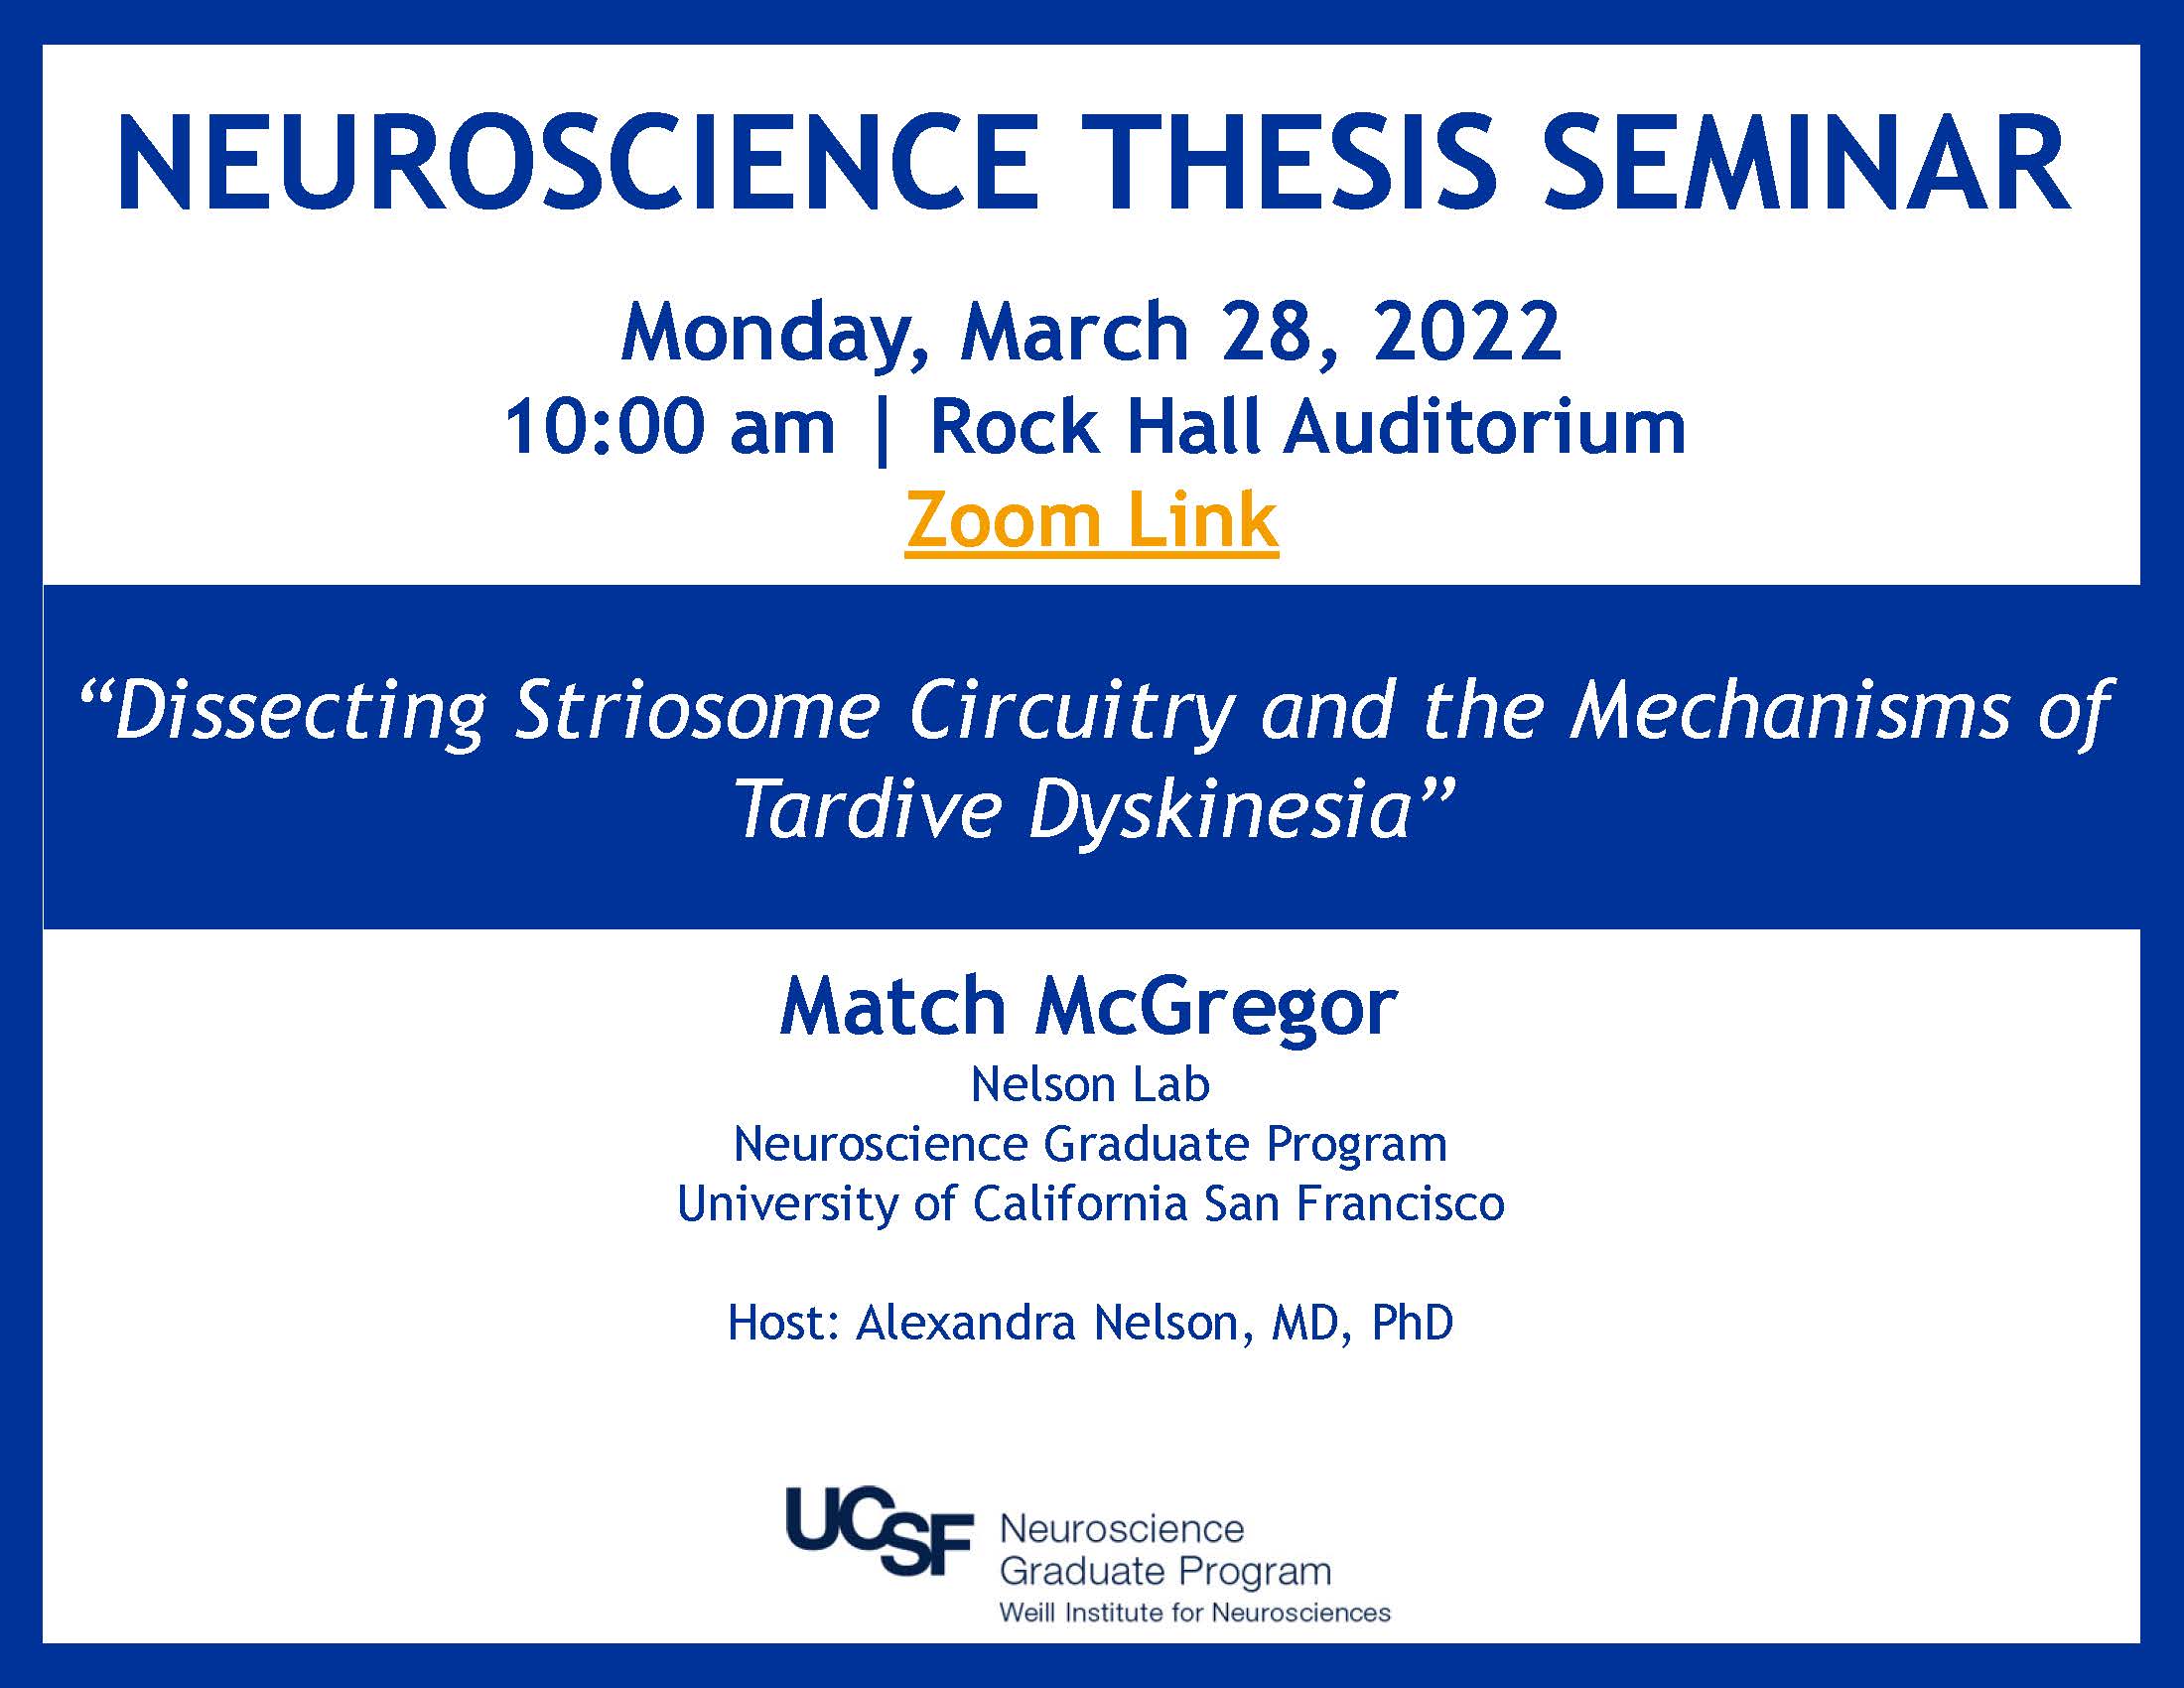 Thesis Seminar Match McGregor Neuroscience Graduate Program